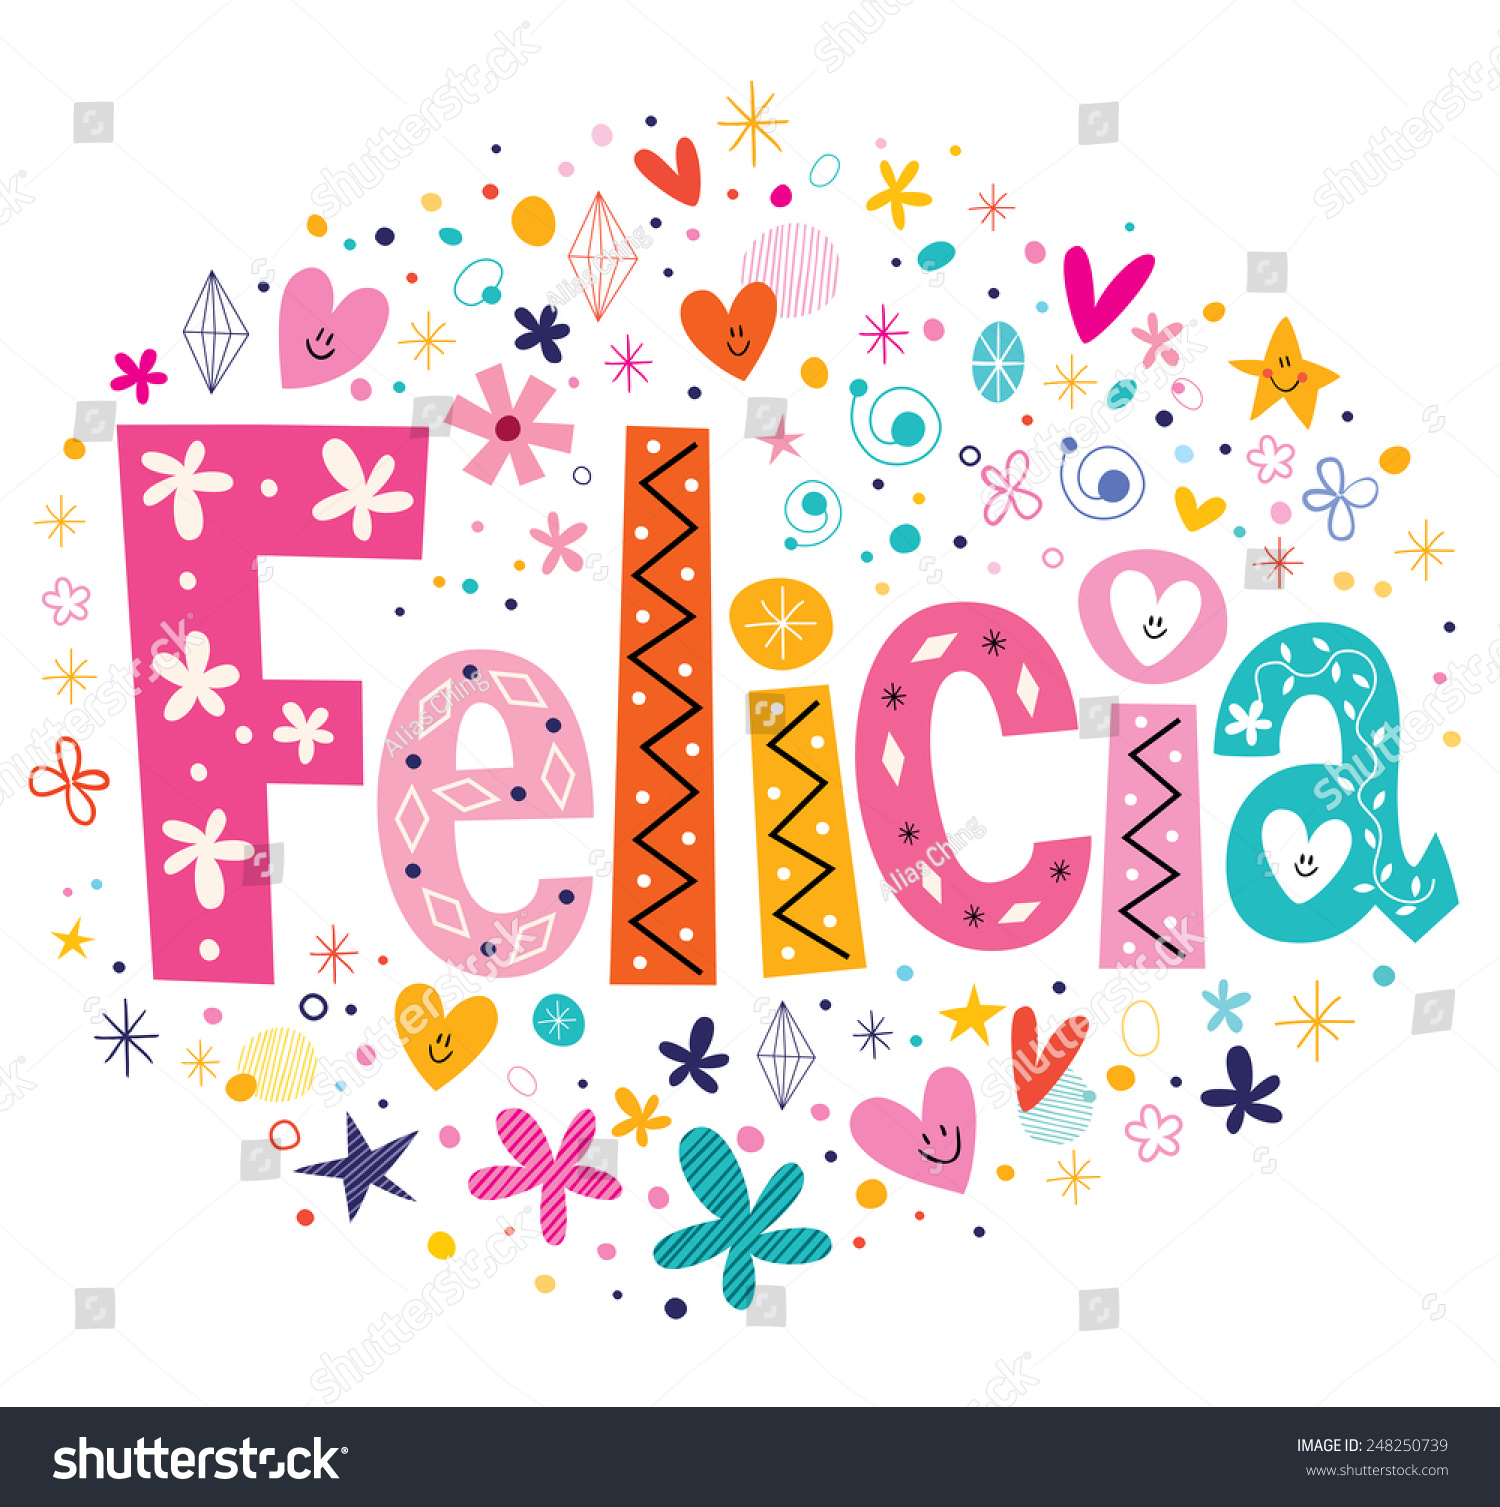 2 Felicia avatar Images, Stock Photos & Vectors | Shutterstock